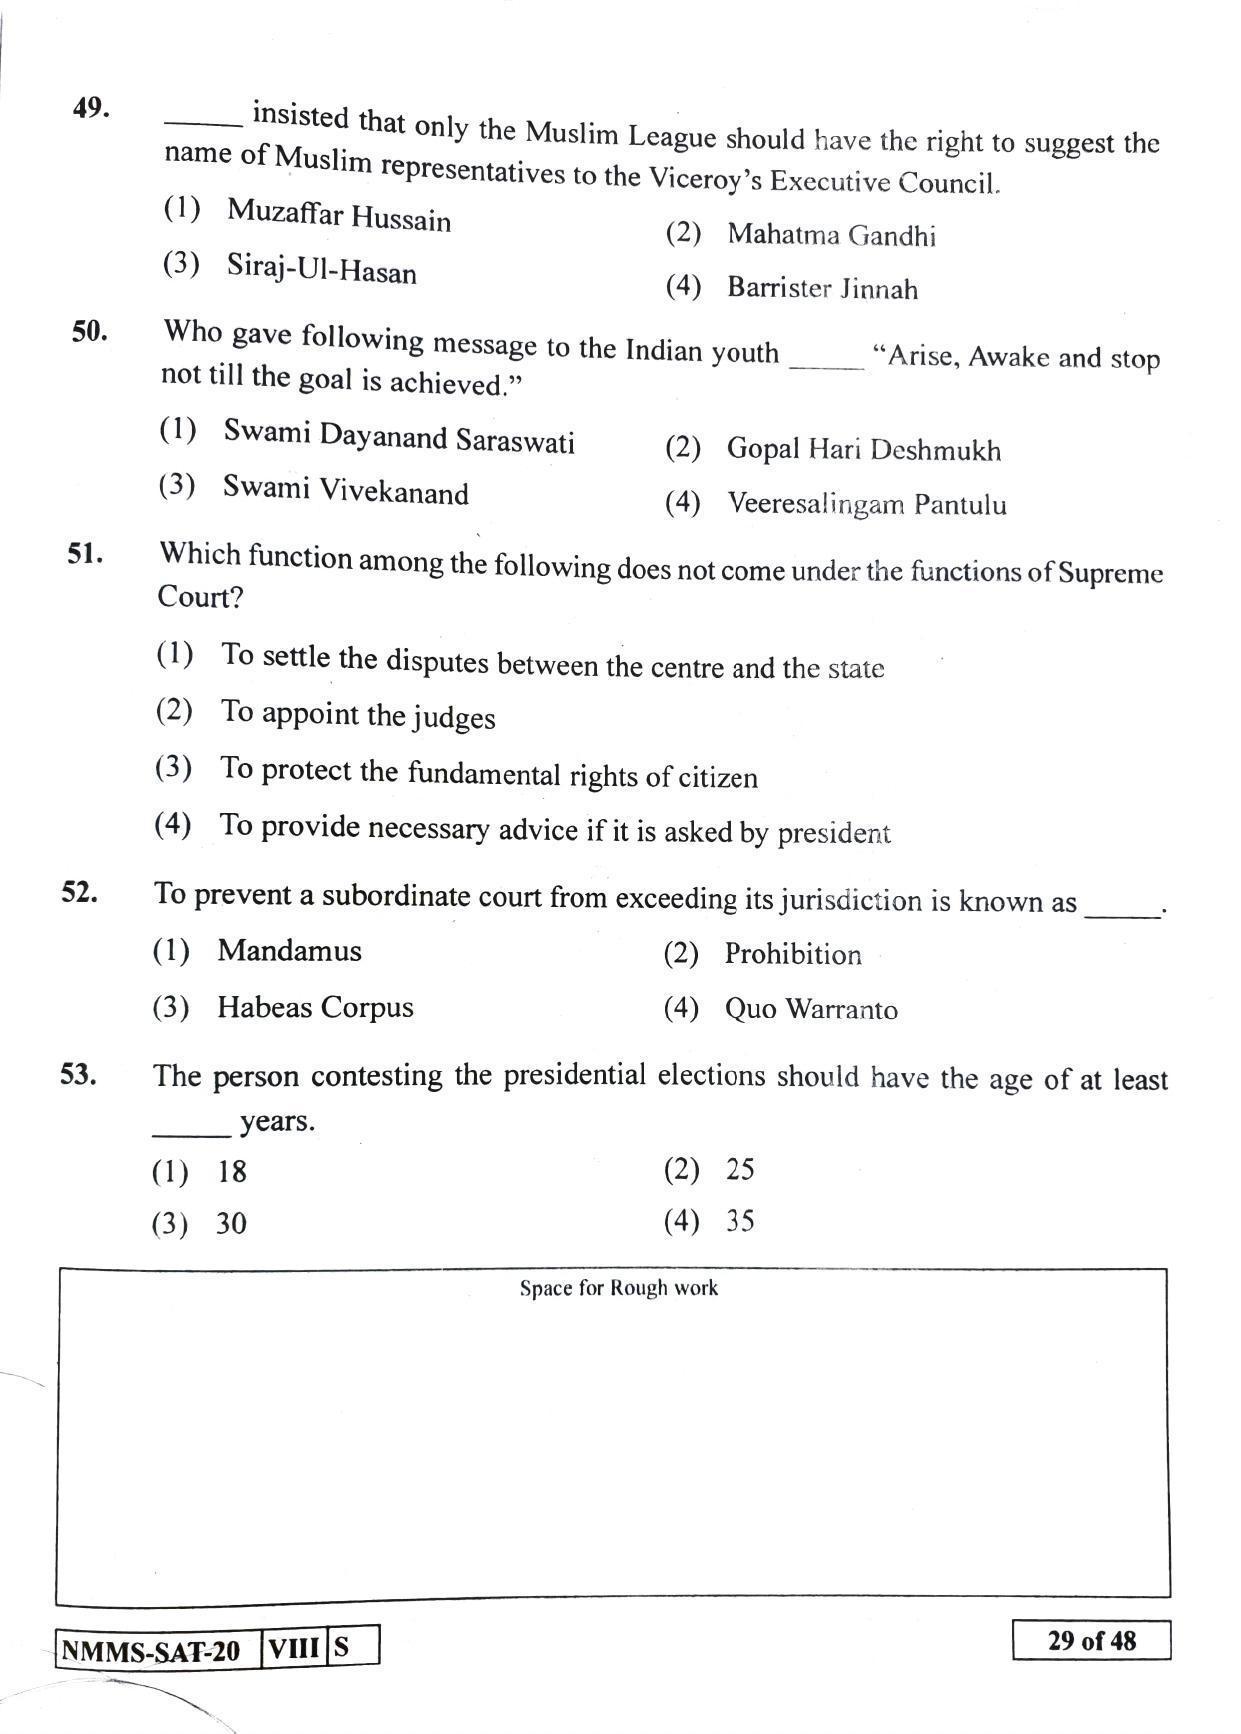 SAT HINDI 2020-21 Class 8 Maharashtra NMMS Question Papers - Page 29